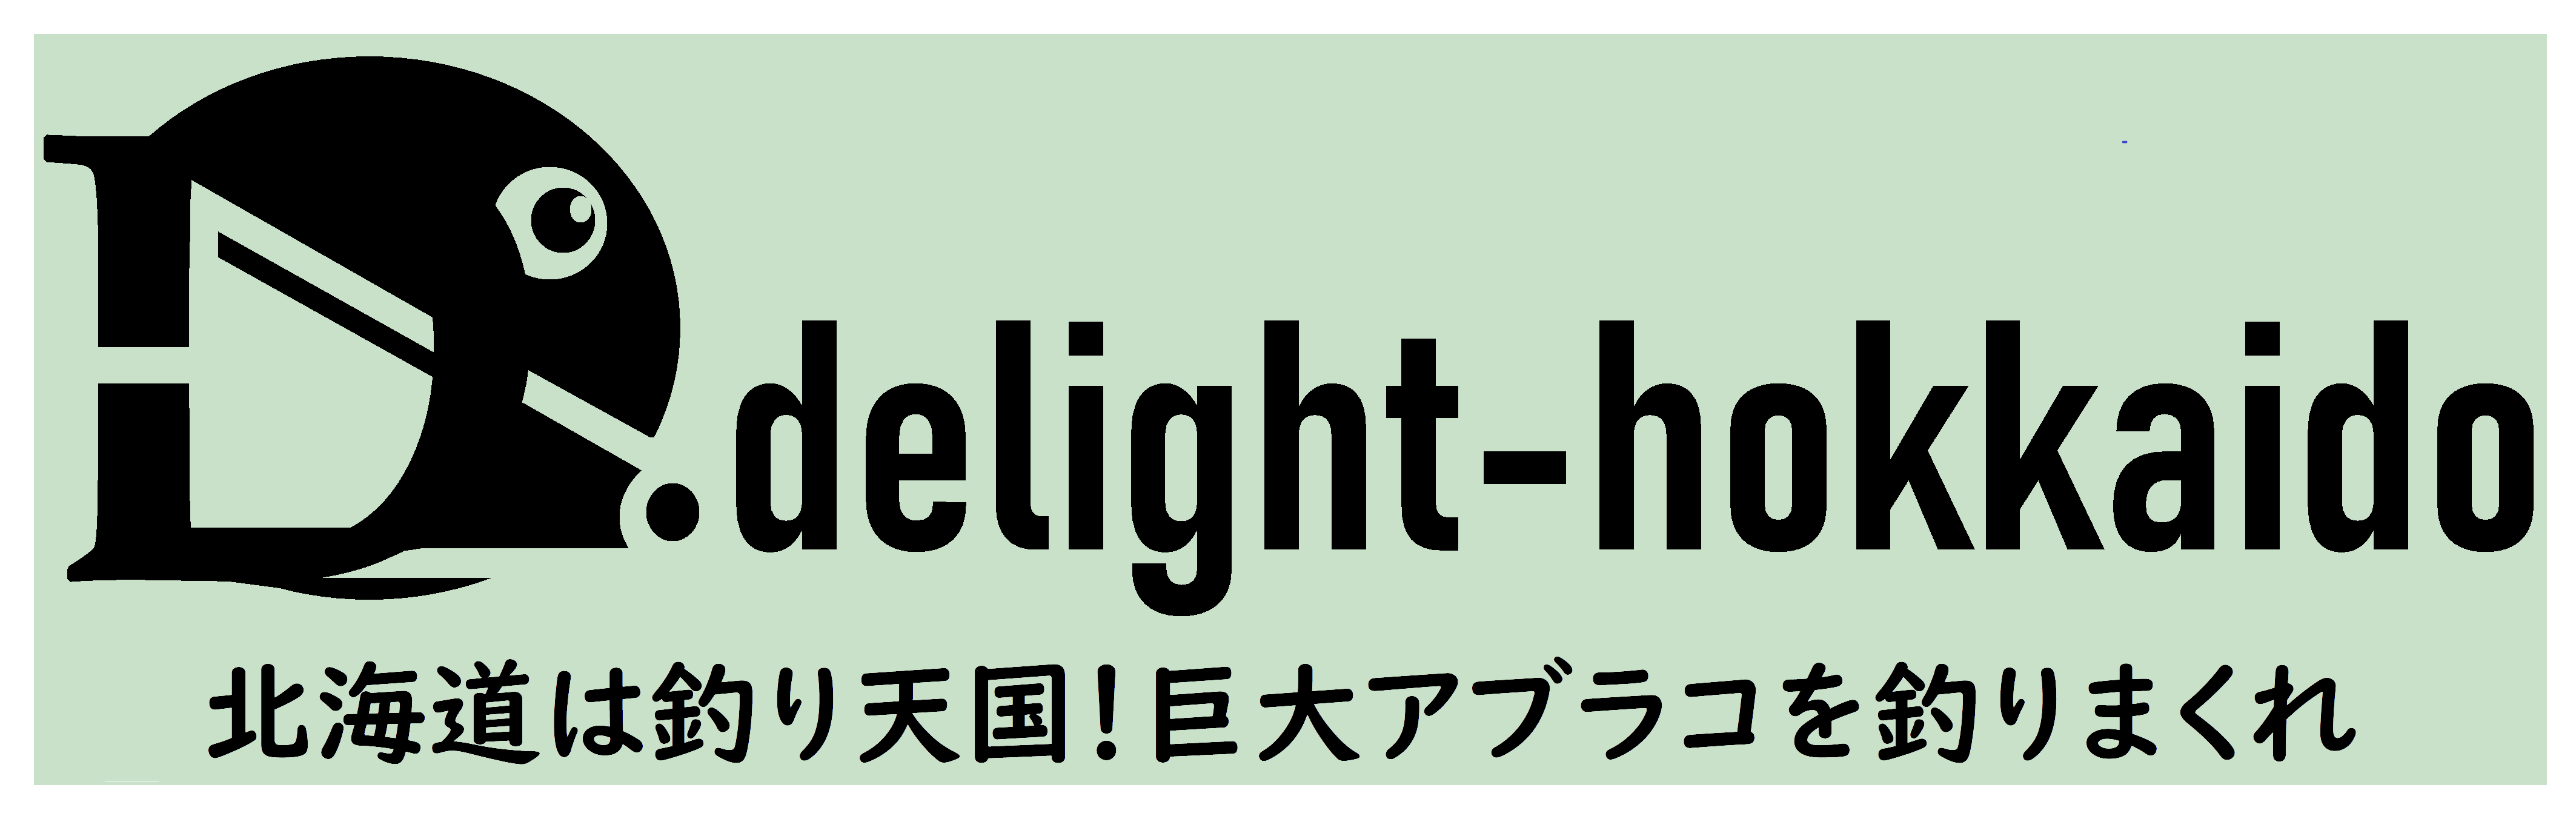 delight-hokkaido バナー